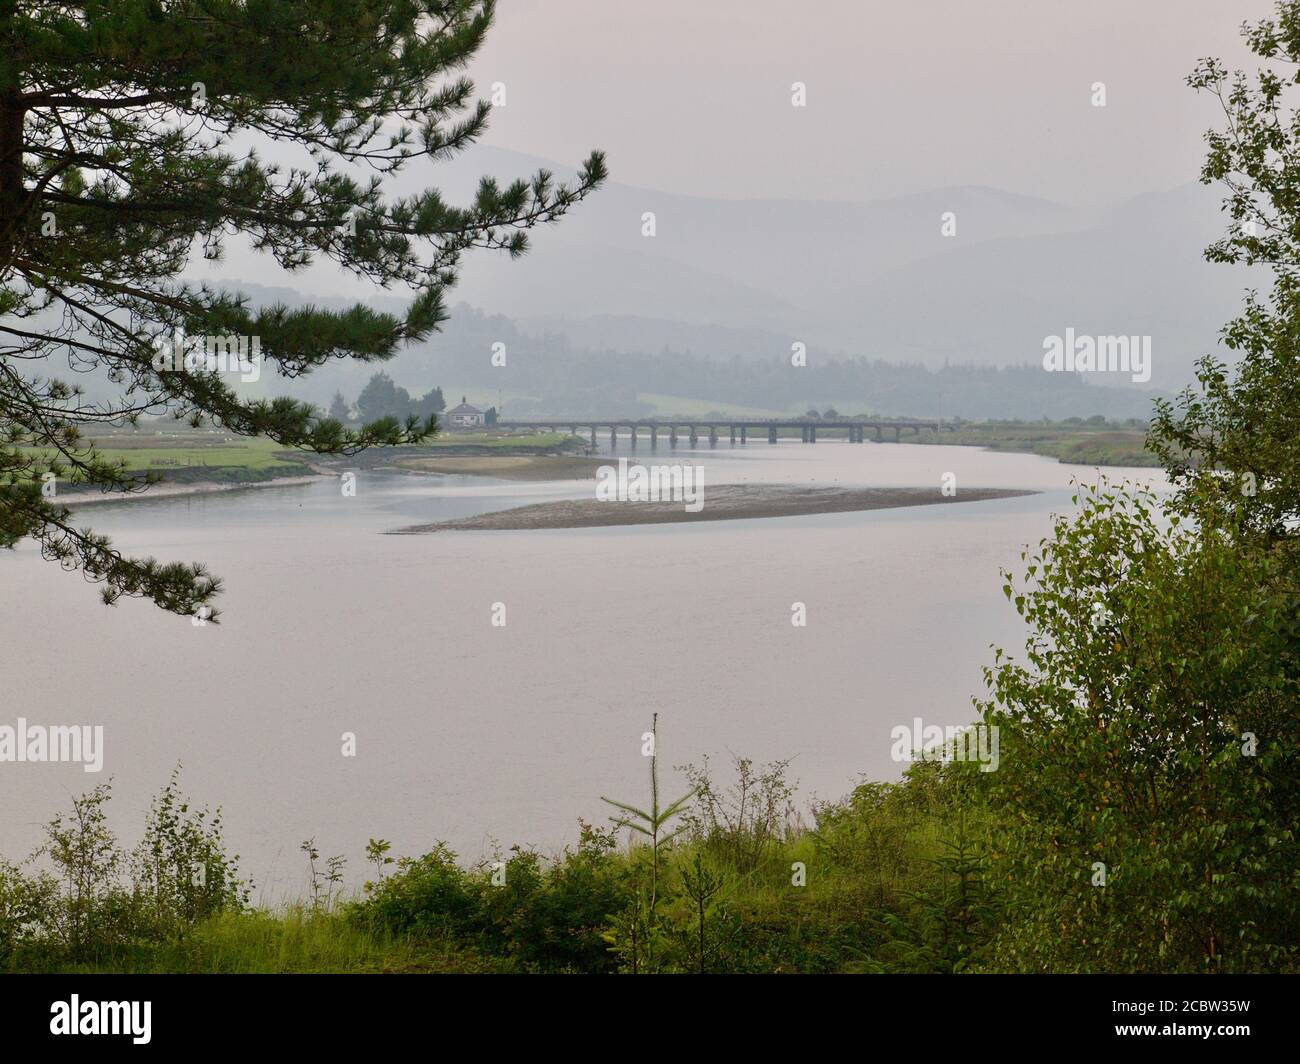 Bridge over Mawddach estuary, Wales Stock Photo